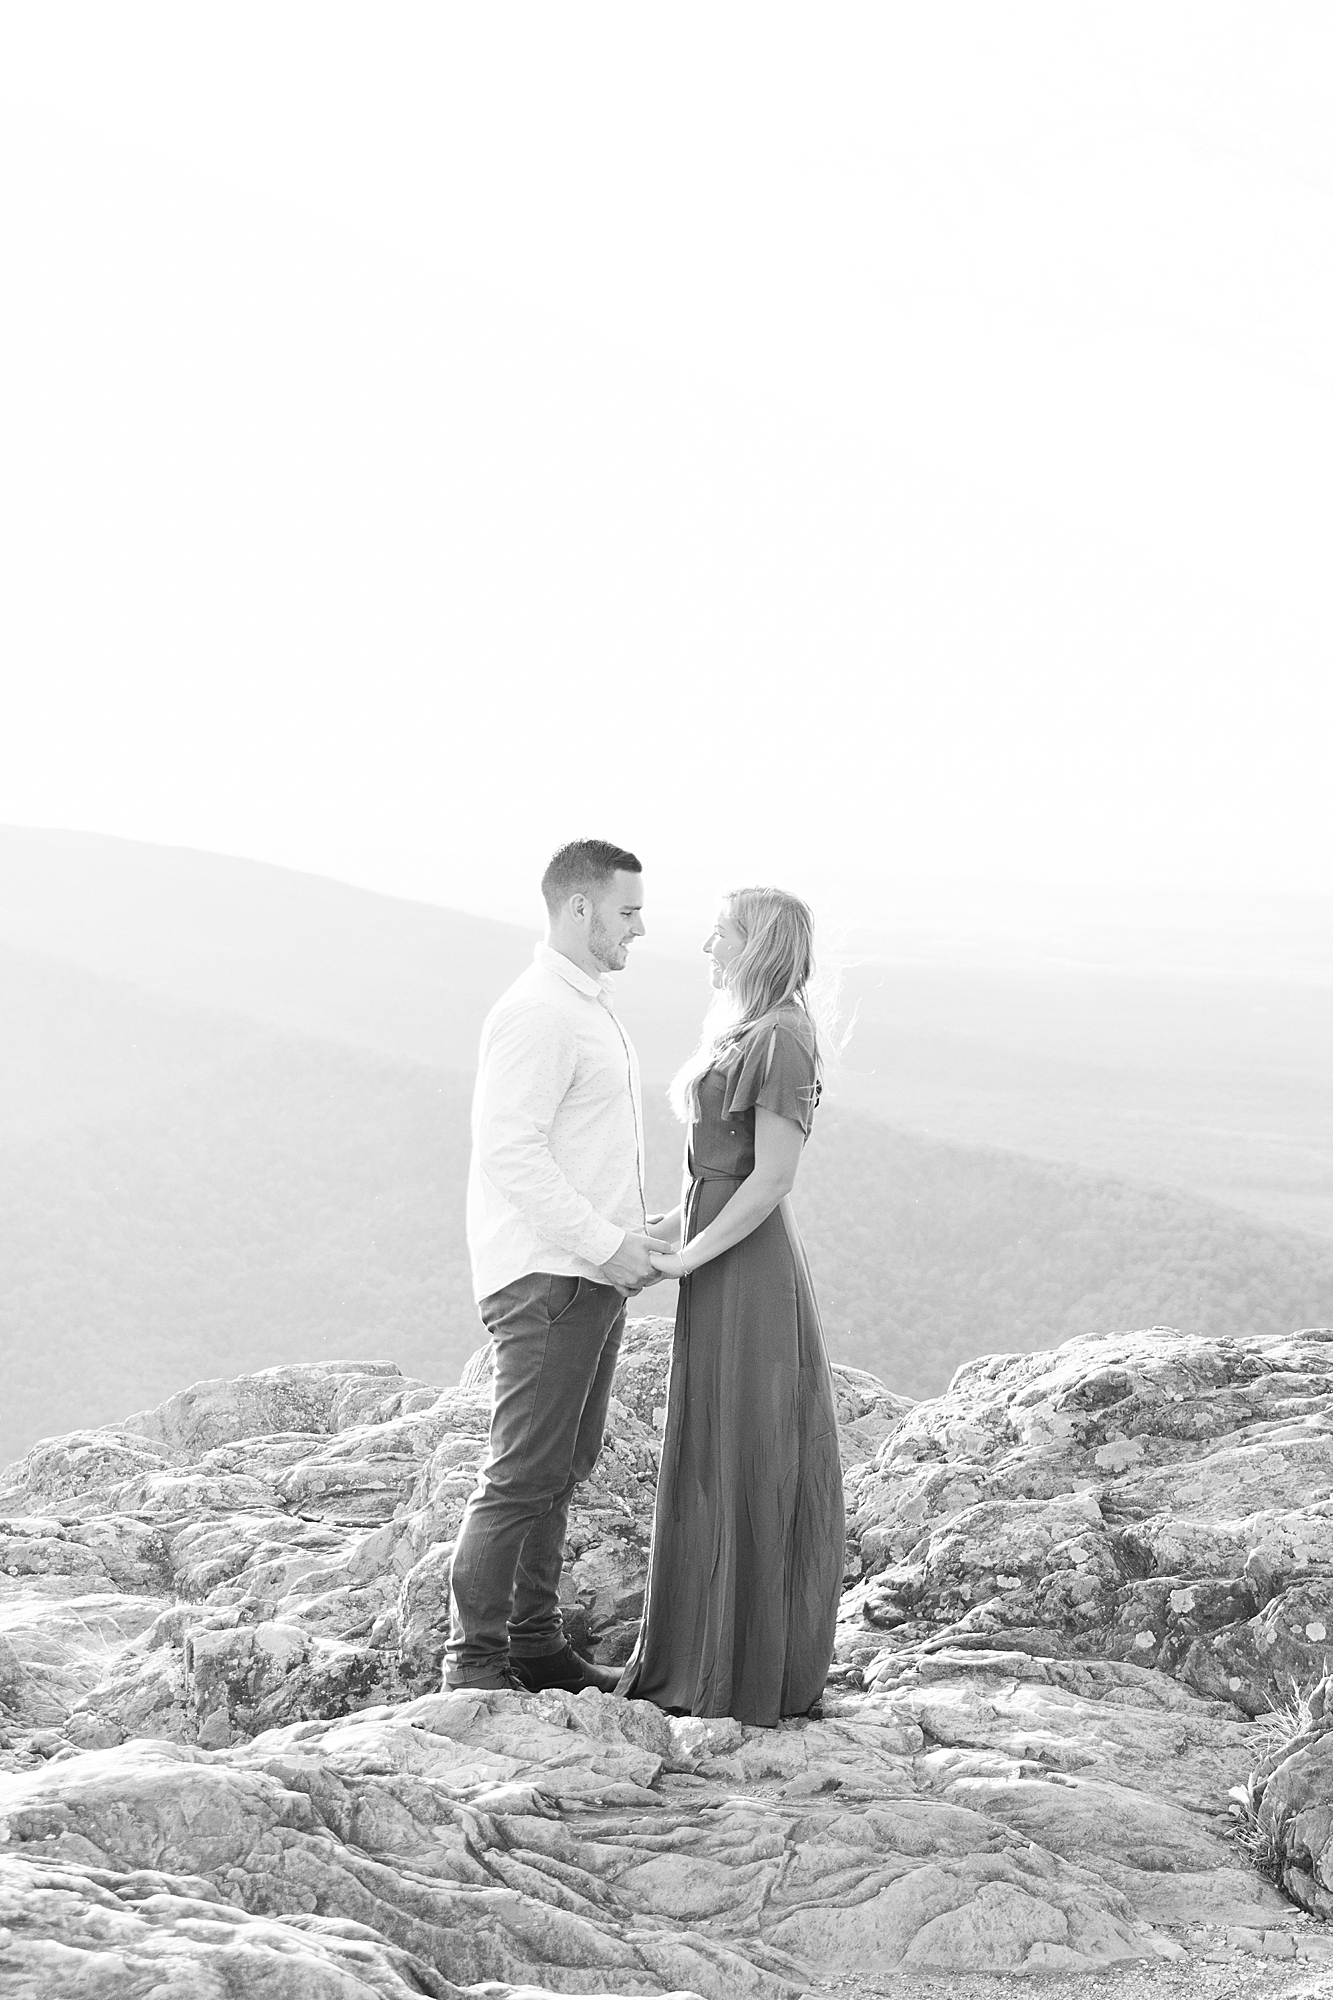 Engagement photos near Blue Ridge Mountains.